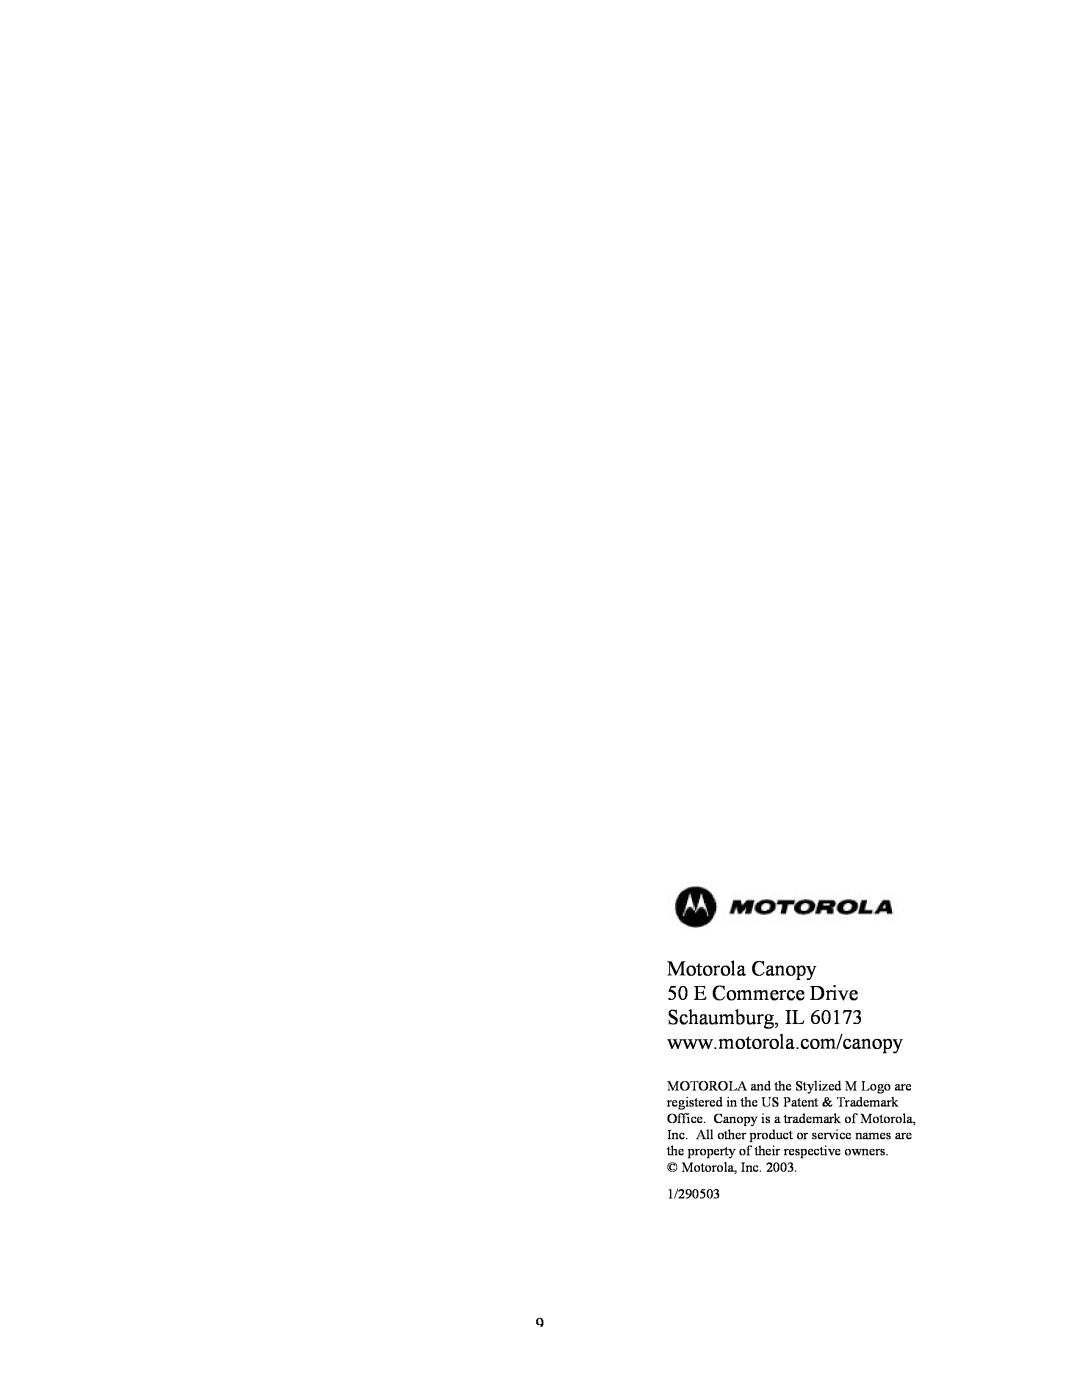 Motorola Wireless Broadband Platform manual Motorola Canopy, Motorola, Inc. 1/290503 